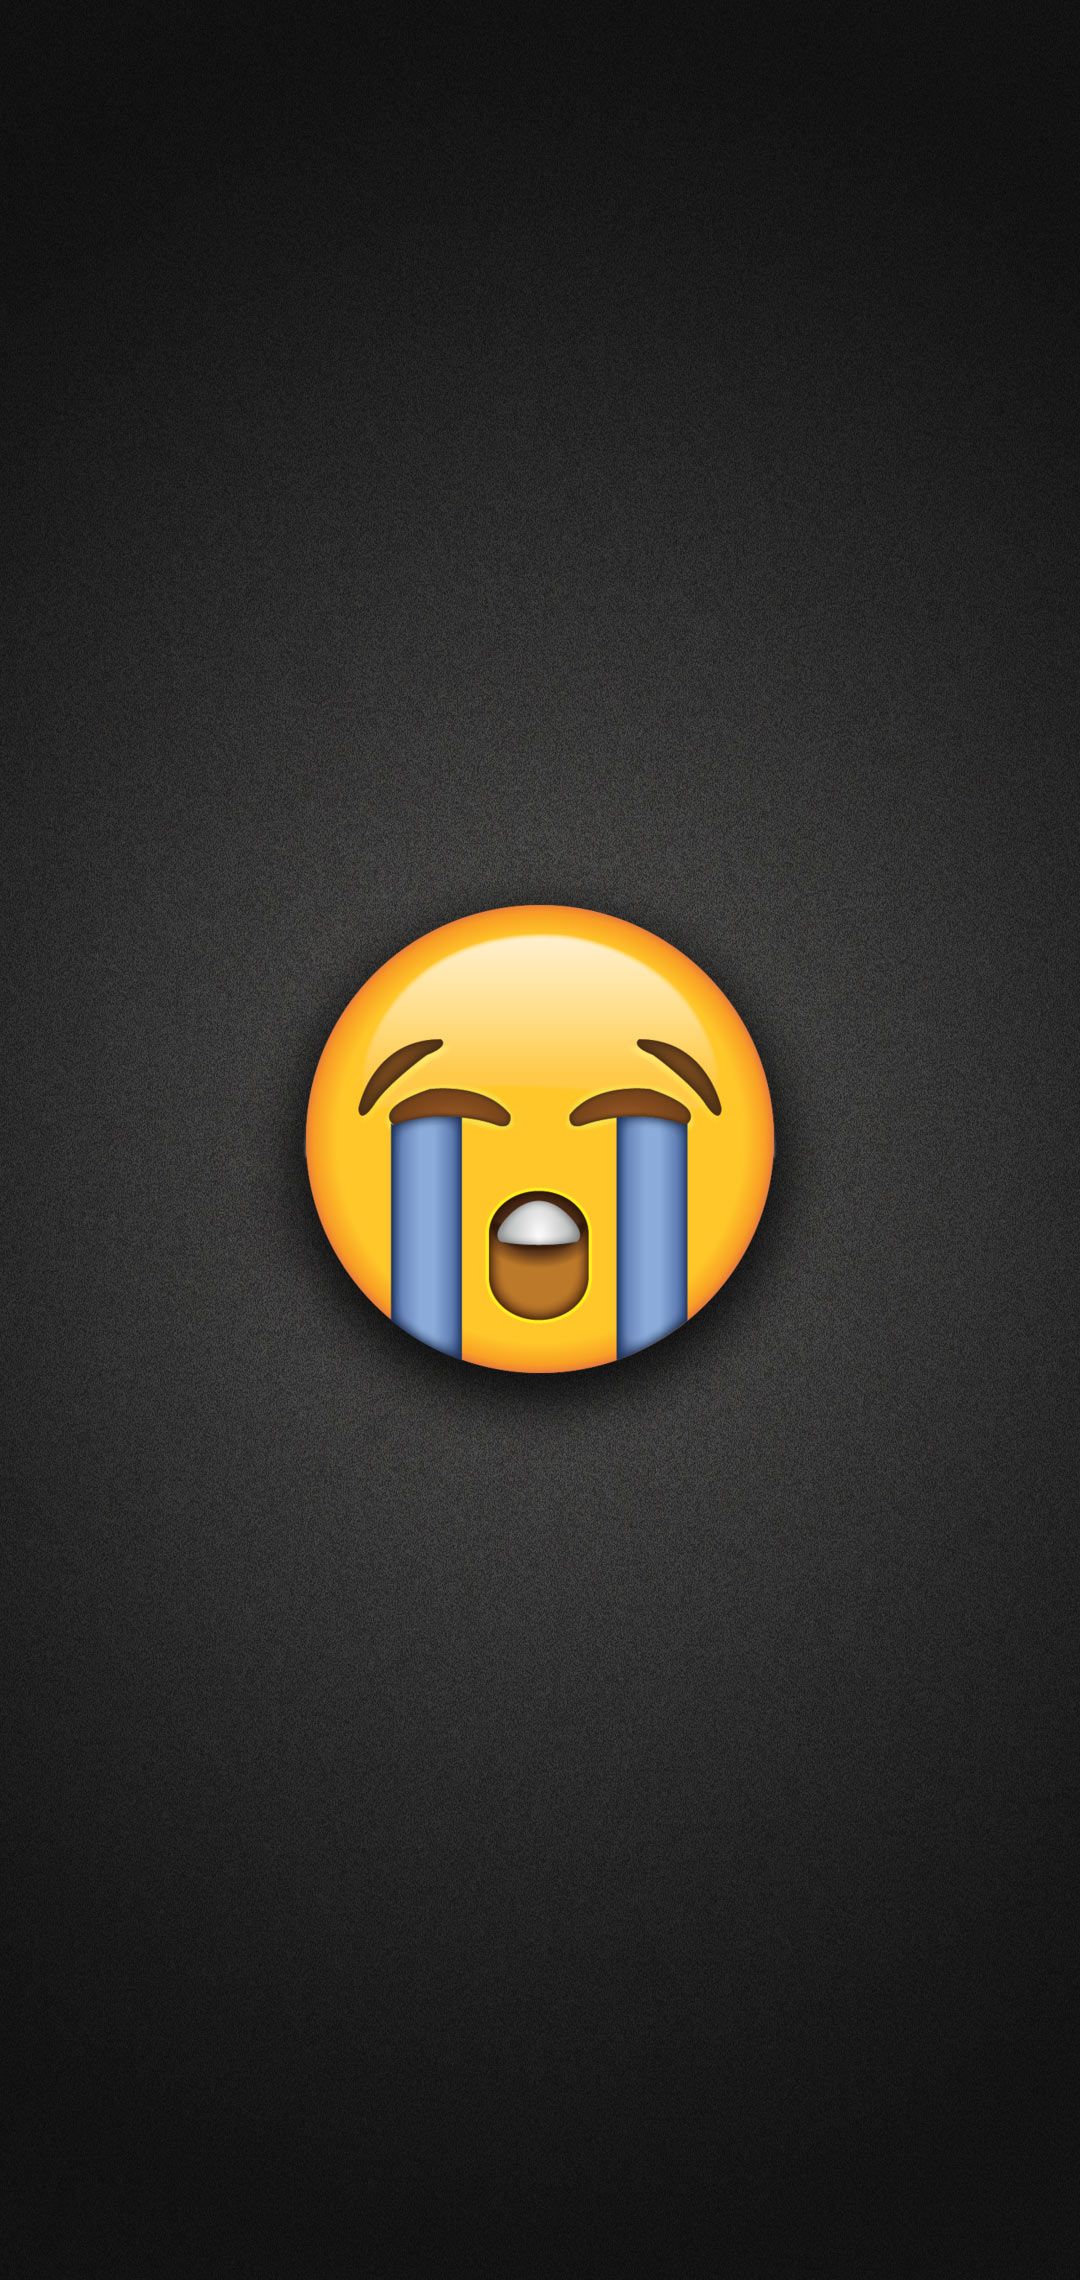 Loudly Crying Face Emoji Phone Wallpaperfonewalls.com